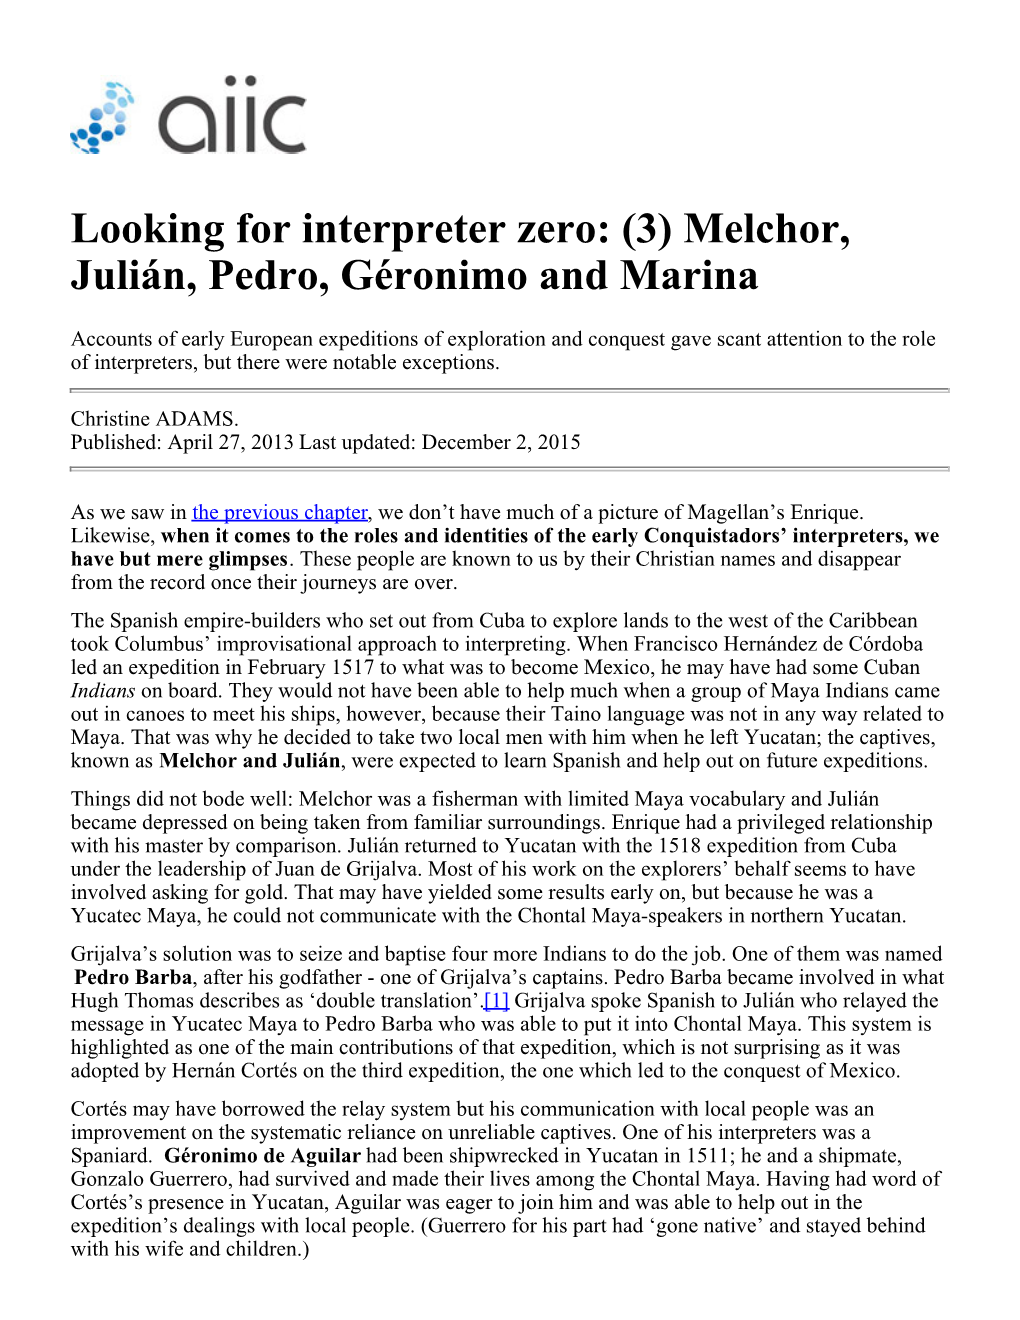 Looking for Interpreter Zero: (3) Melchor, Julián, Pedro, Géronimo and Marina